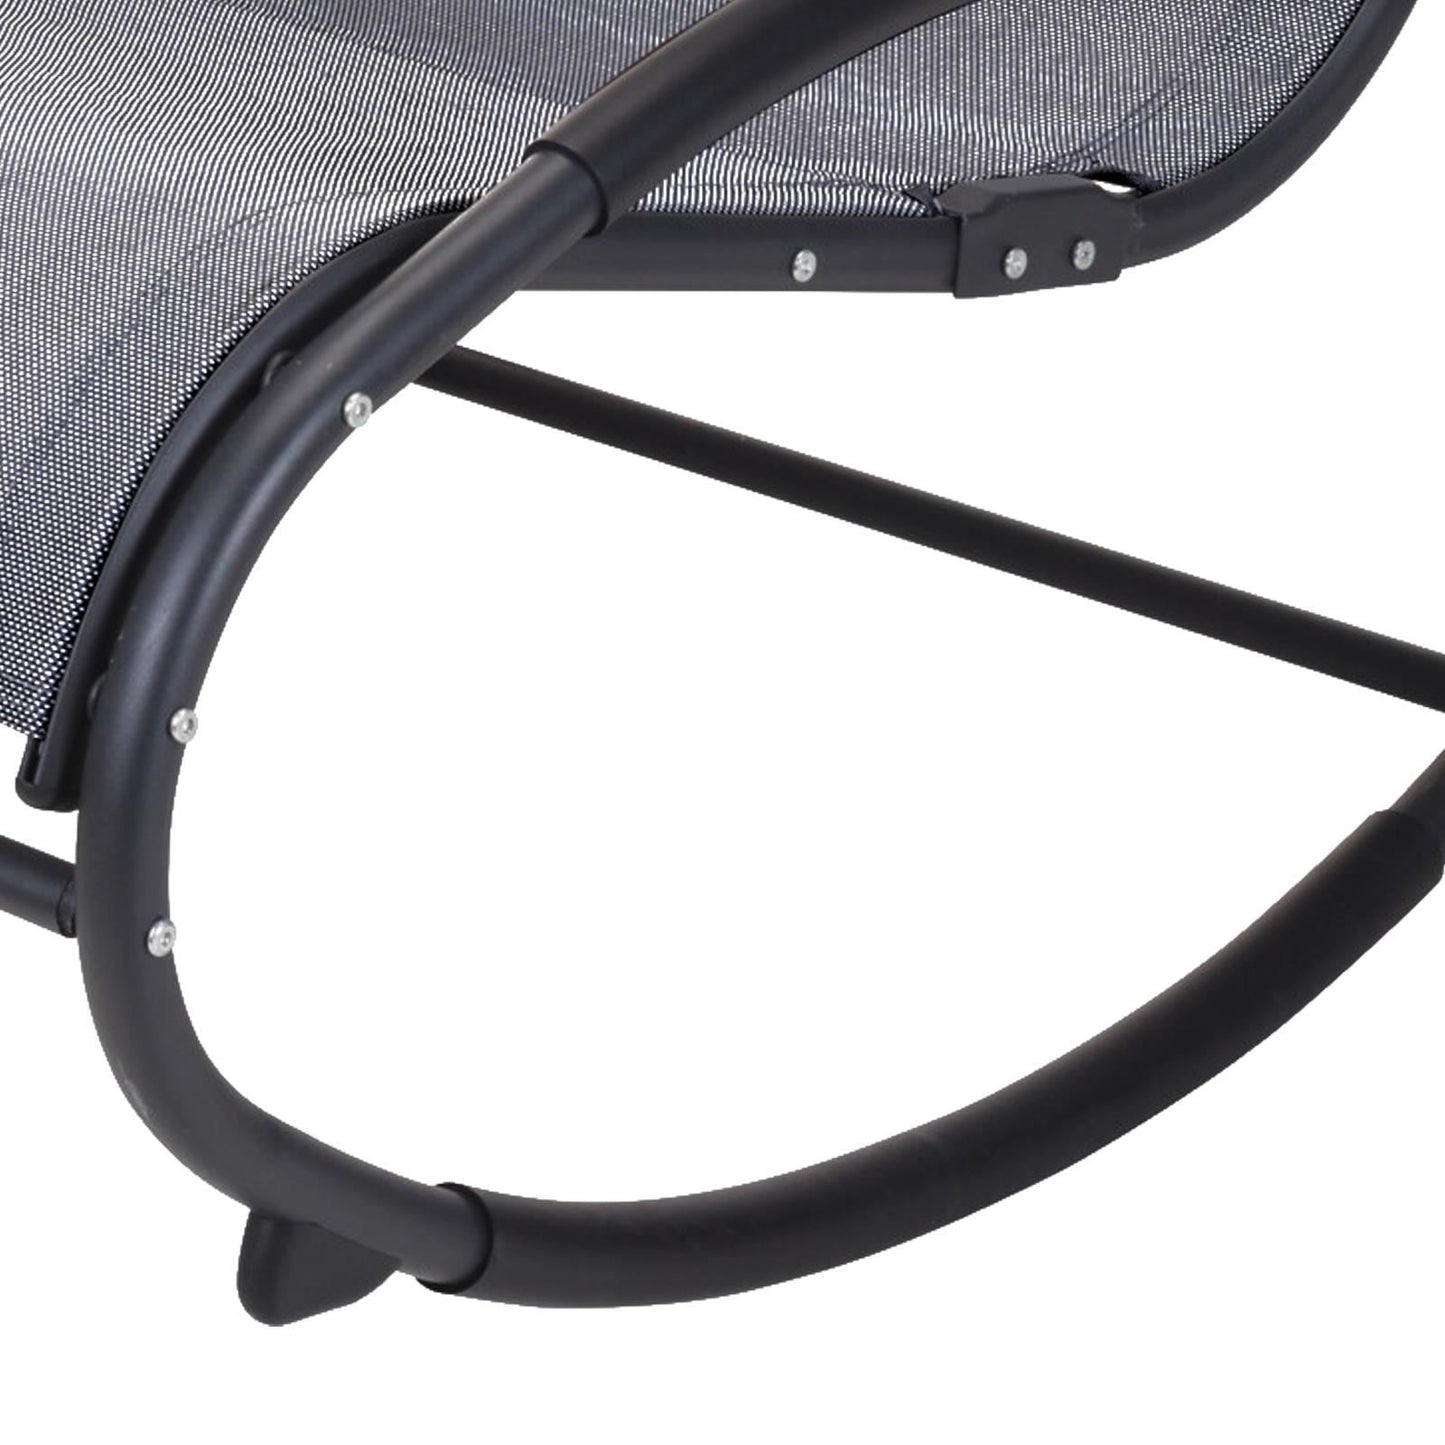 Outdoor Garden Rocking Chair Grey Seat Recliner Patio